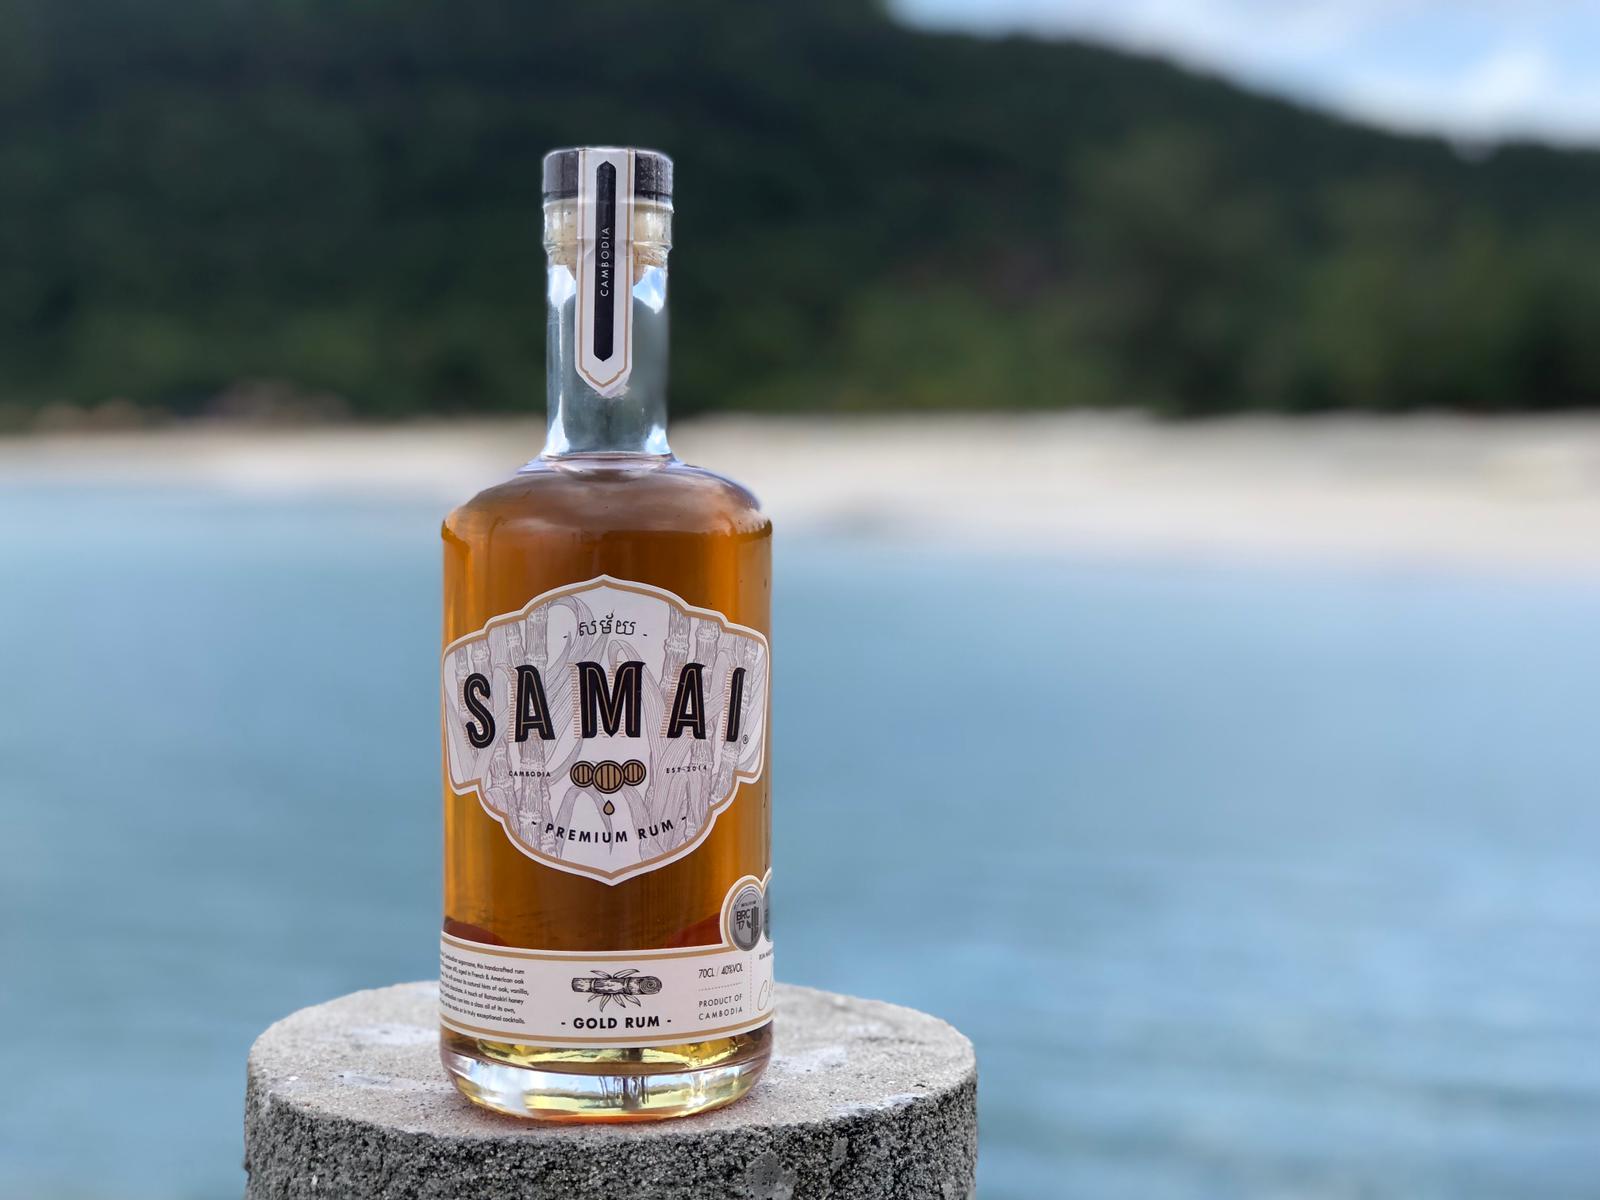 Samai bottle next to a beach